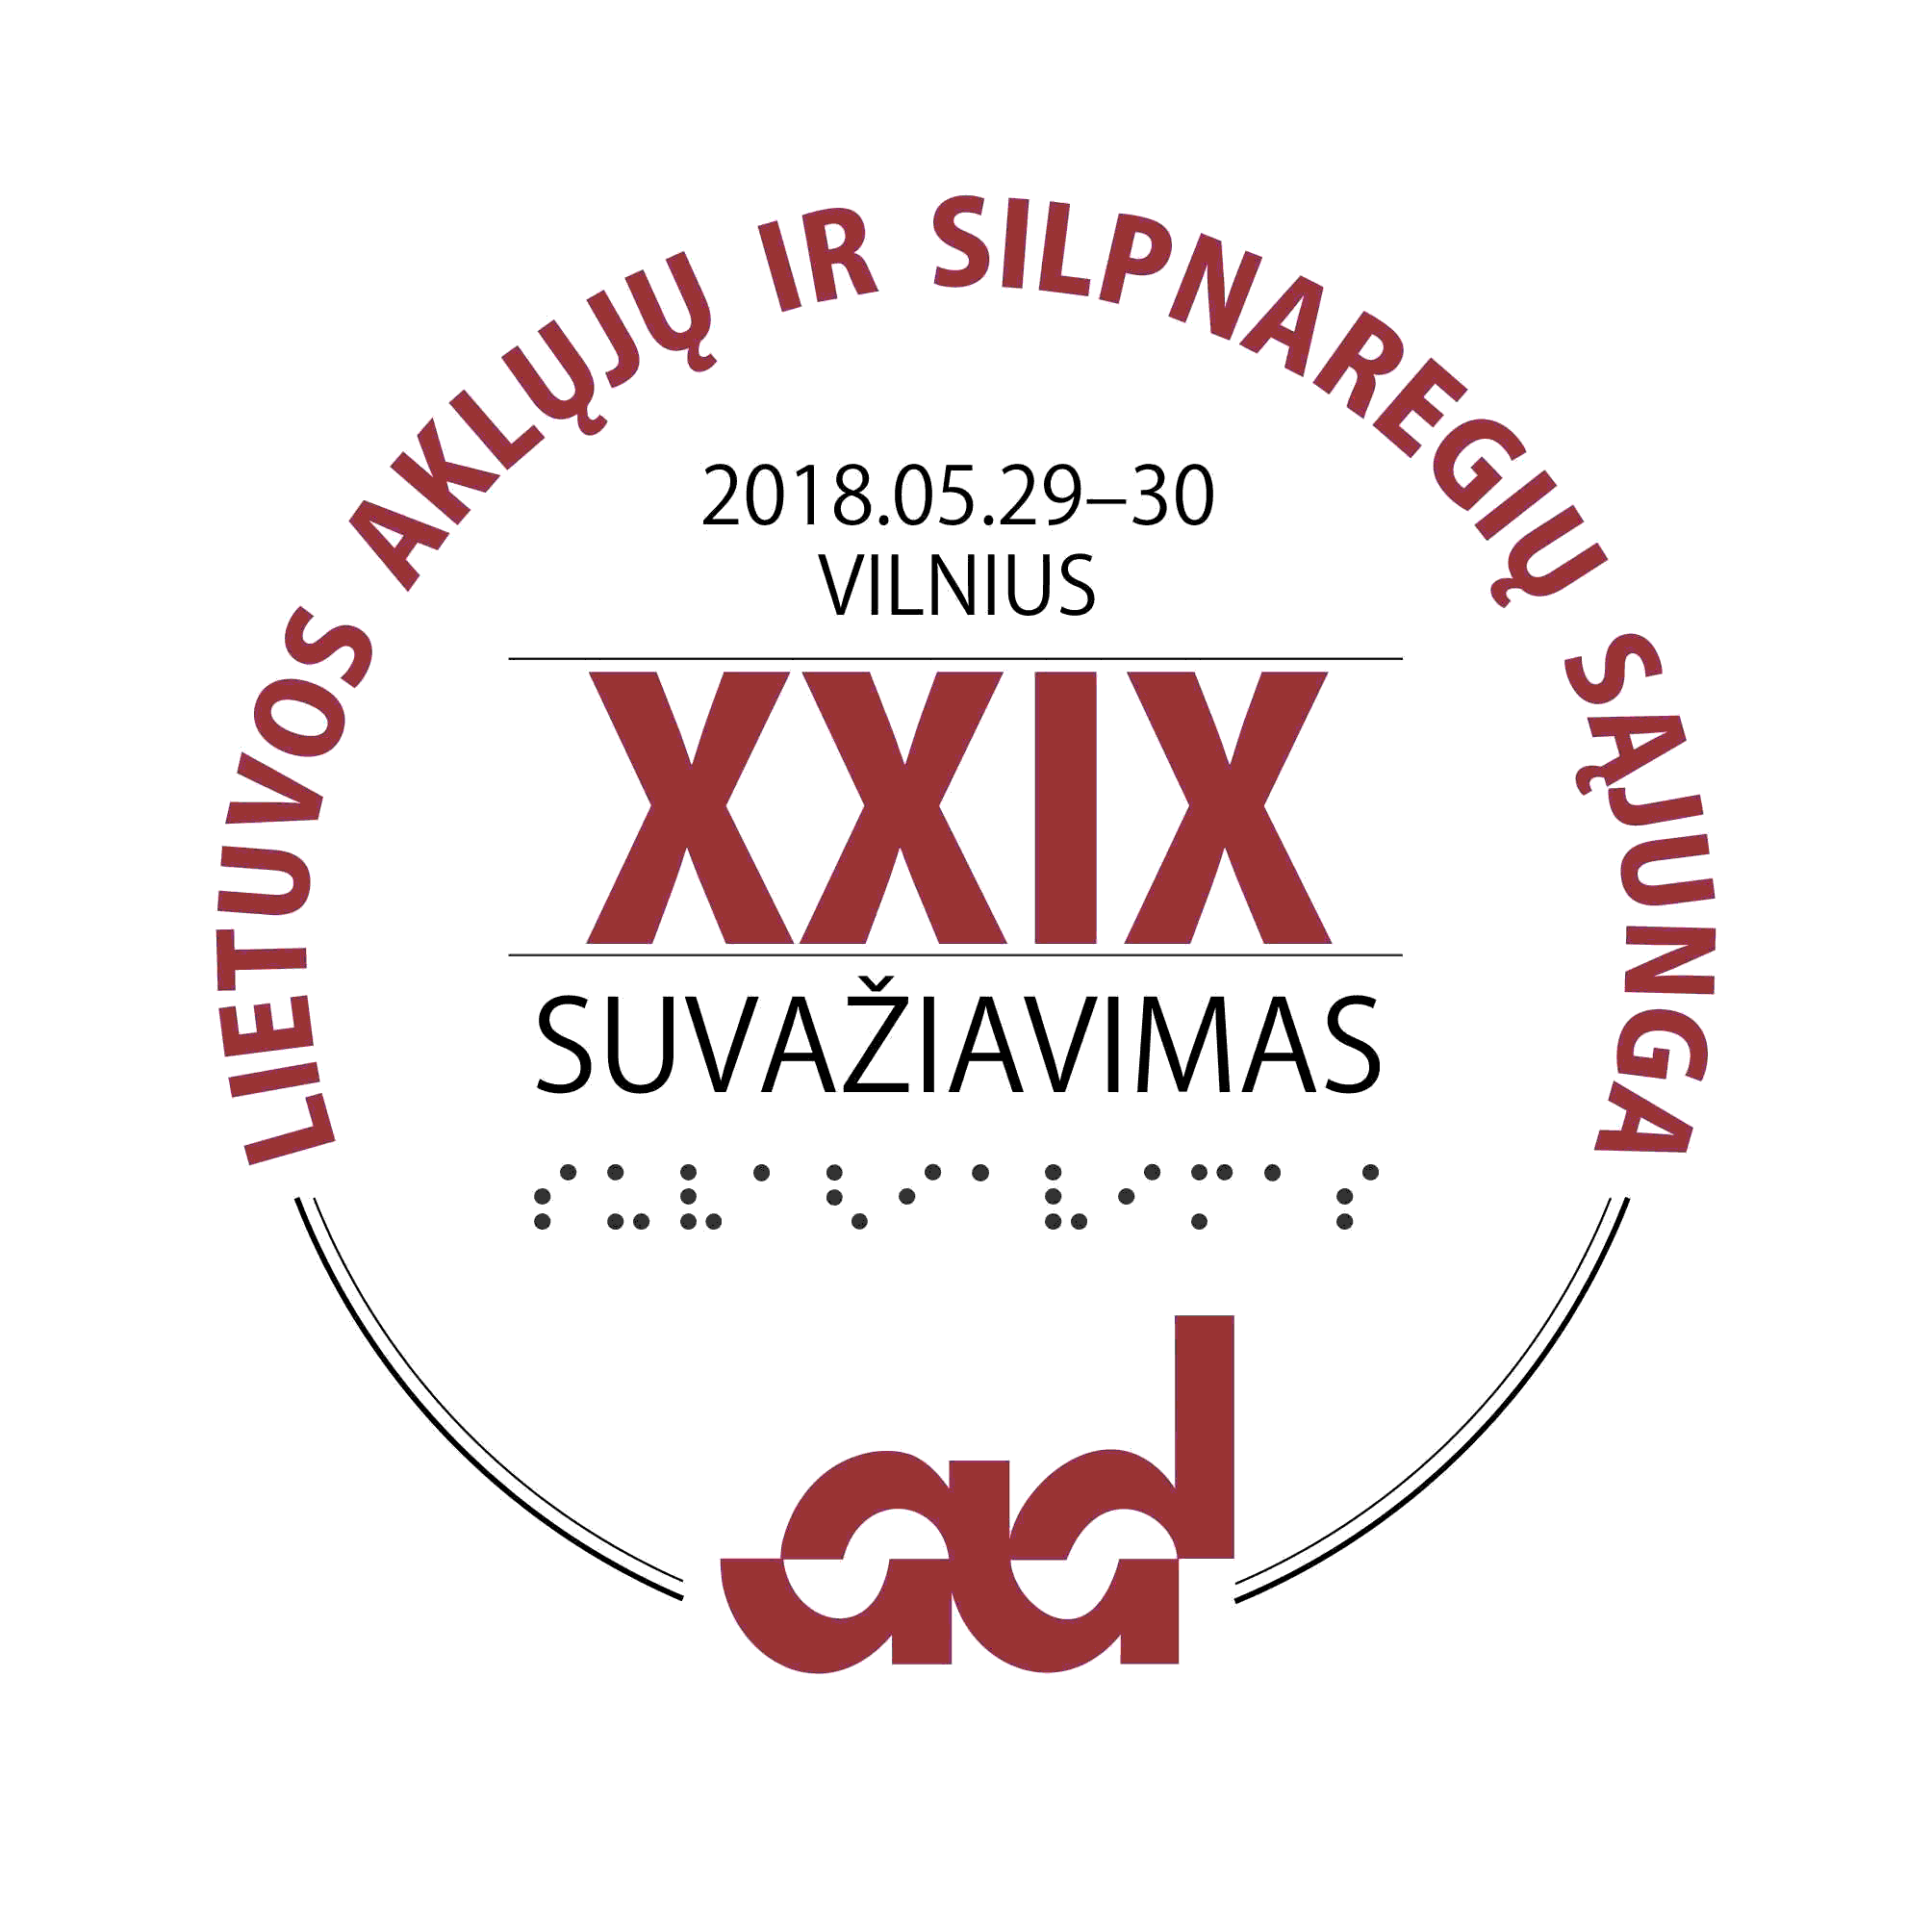 LASS XXIX suvaiavimo emblema